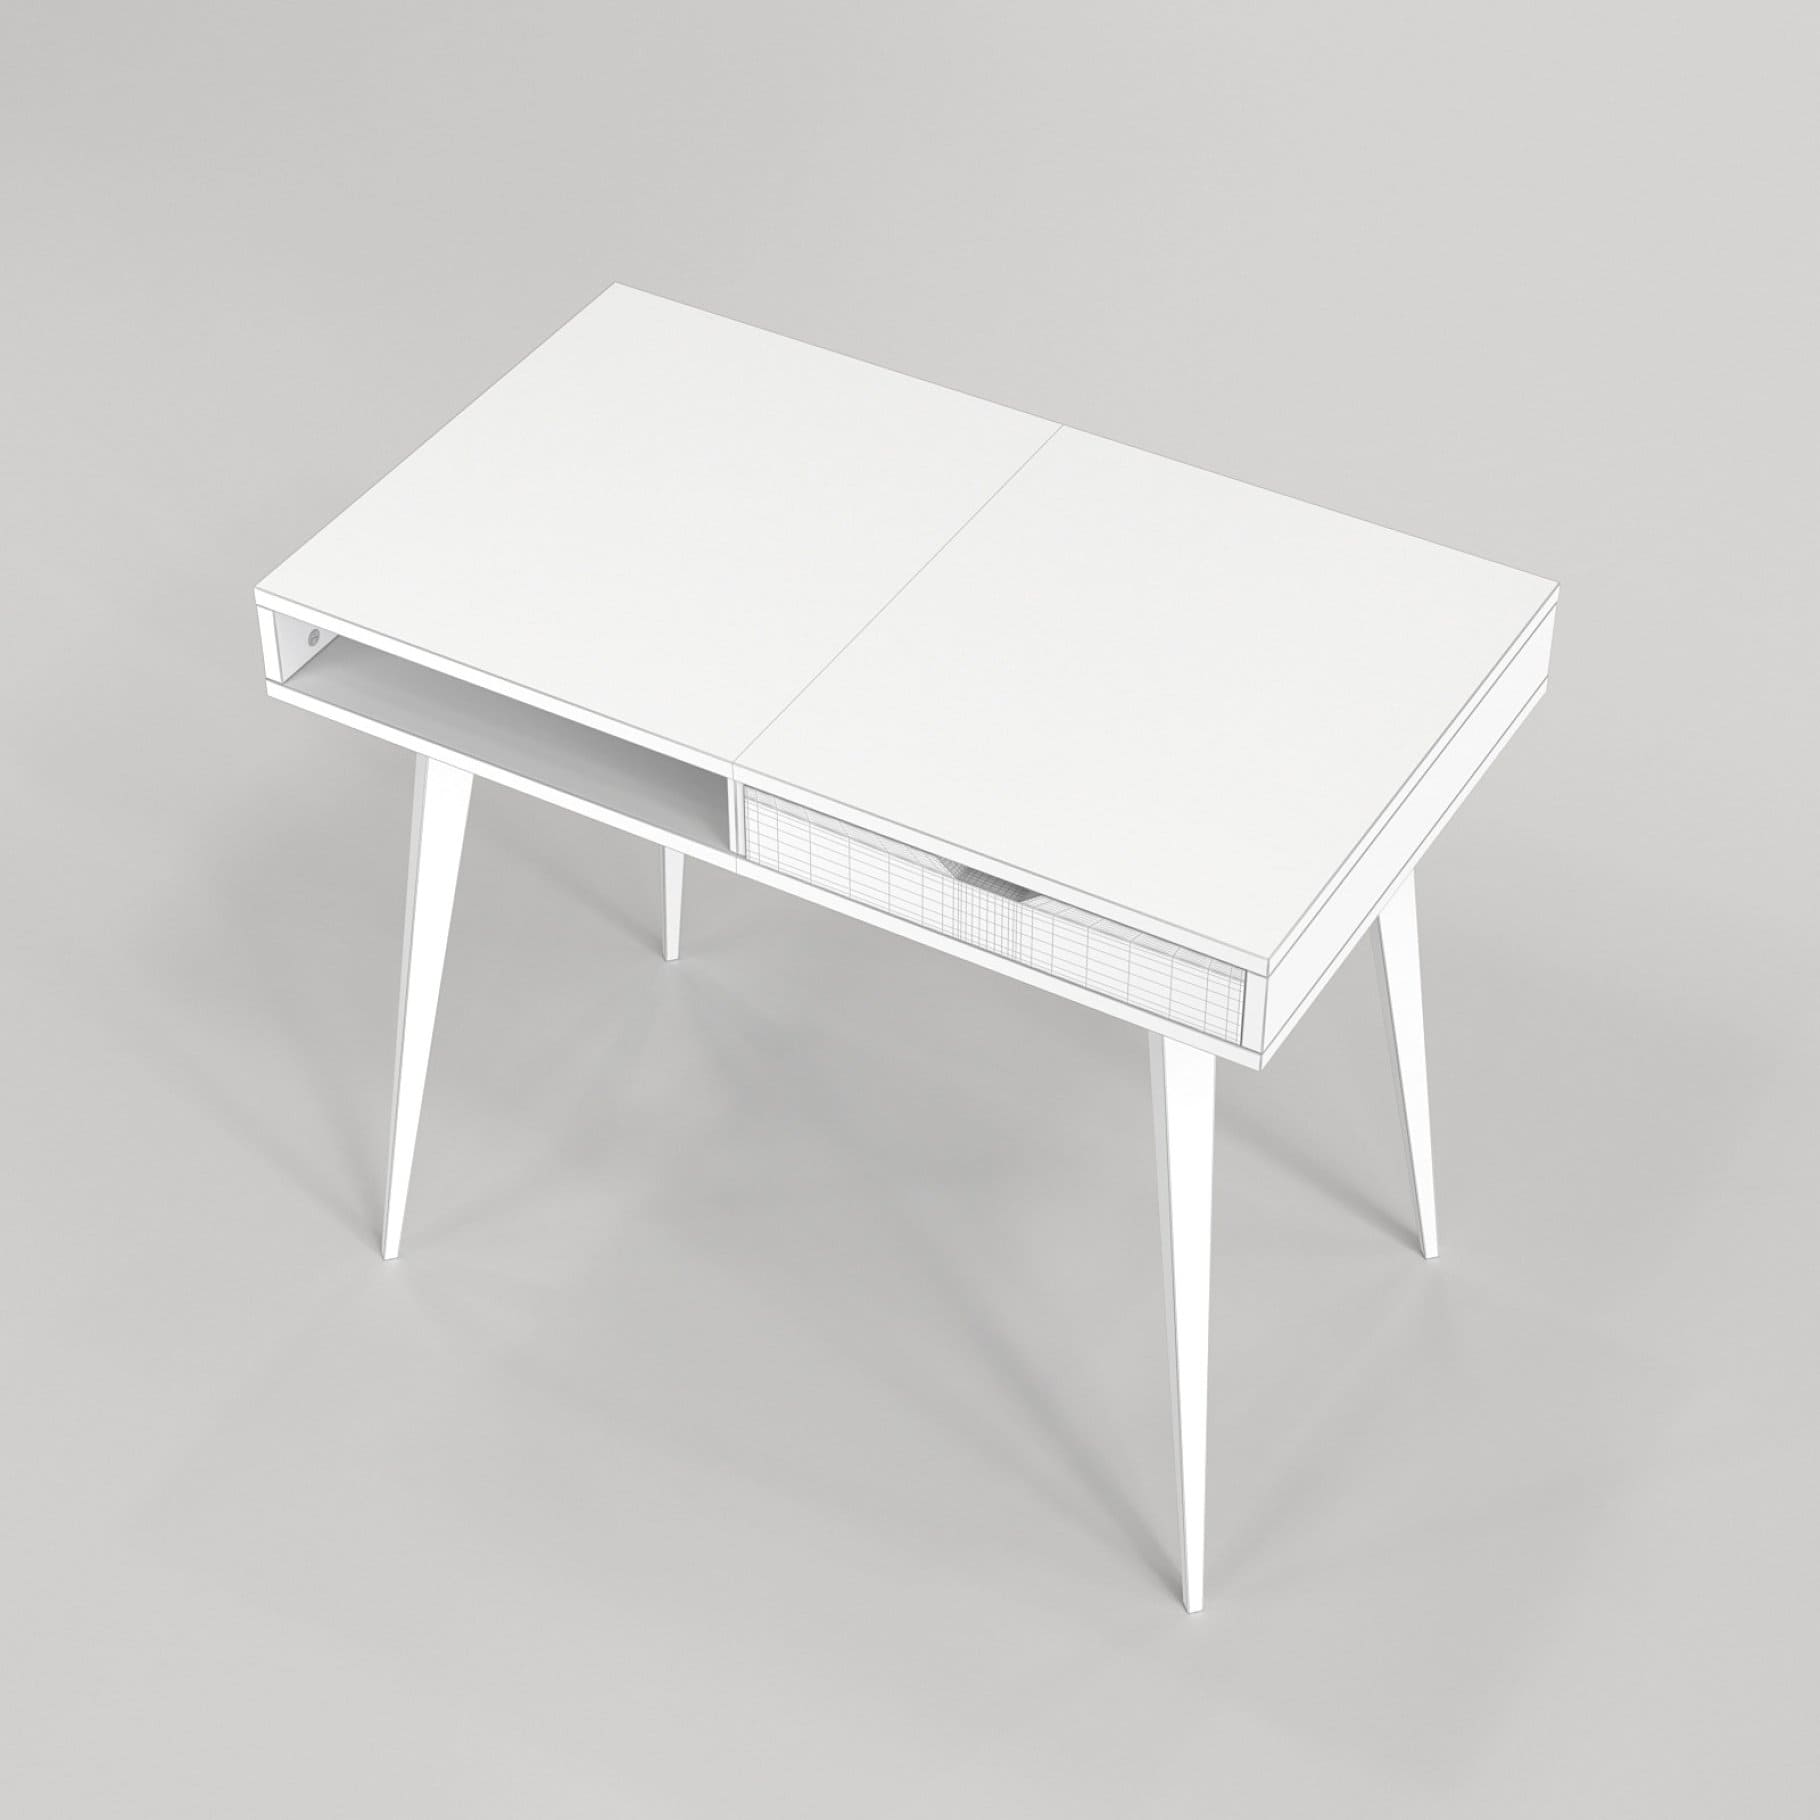 Top photo of a white Scandinavian desk with shelves, model 04.